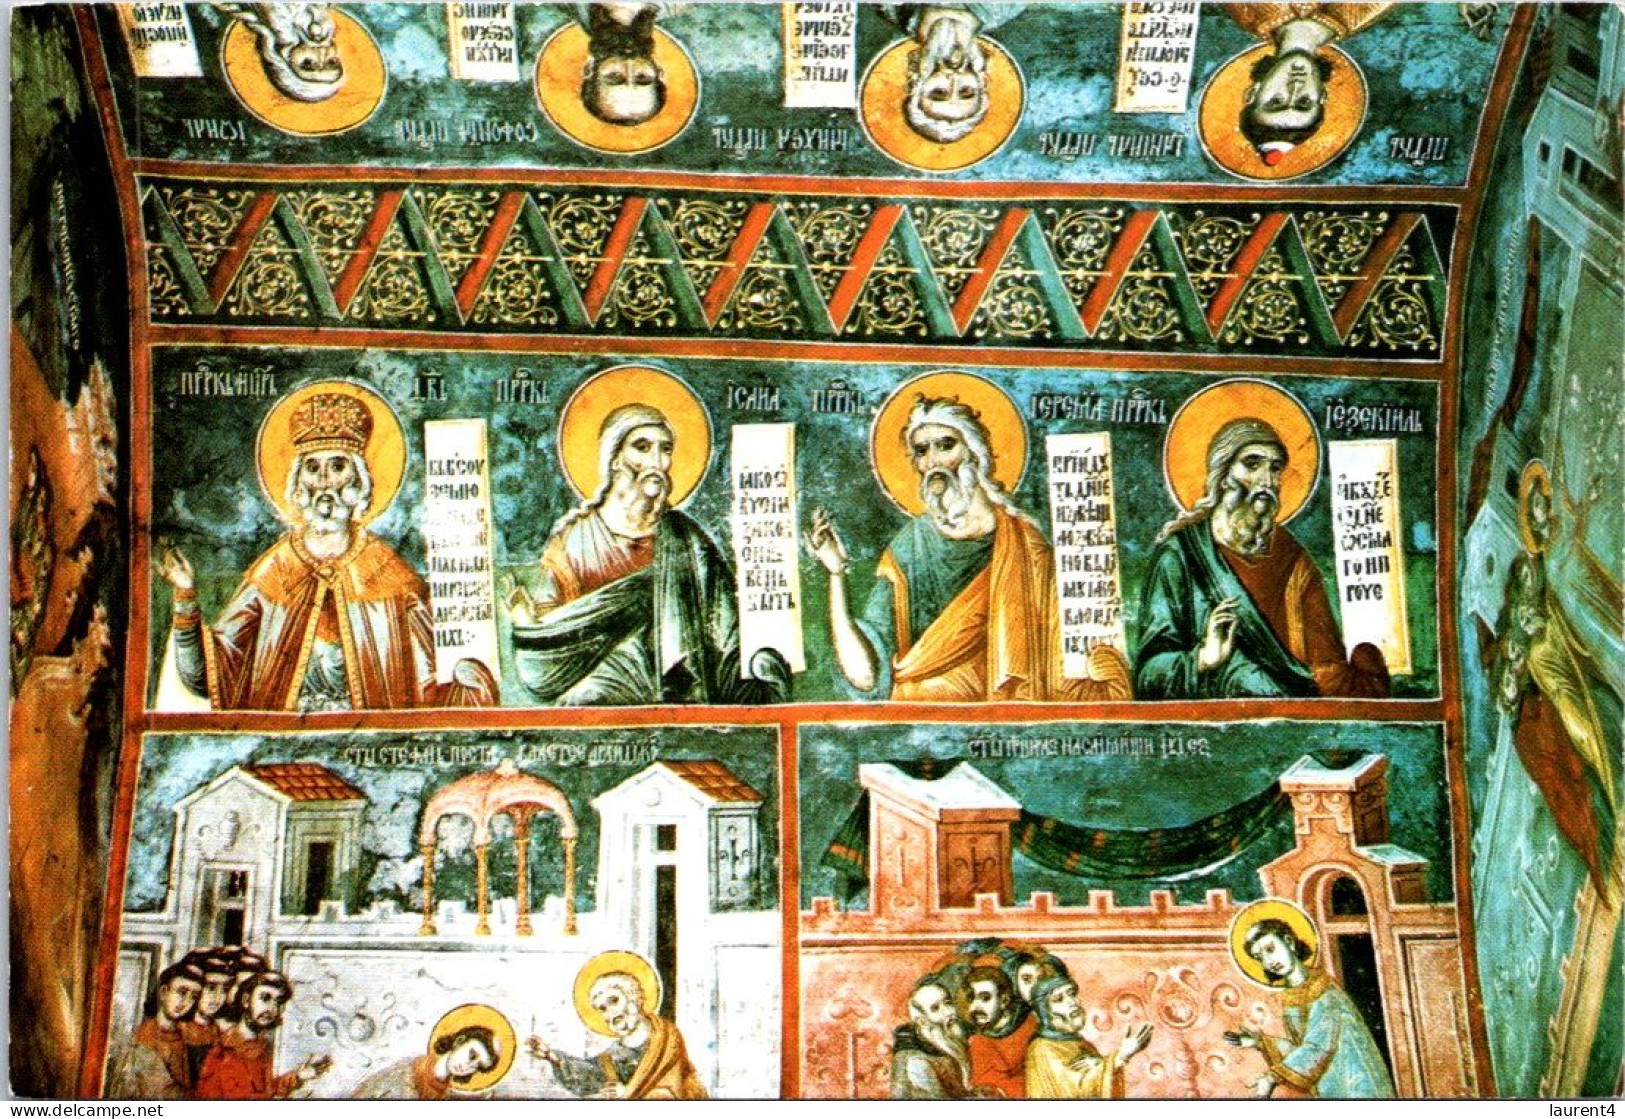 2-5-2024 (3 Z 36) Croatia (Ex Yugolsavia) Religious Church Painting In Zagreb (2 Postcards) - Paintings